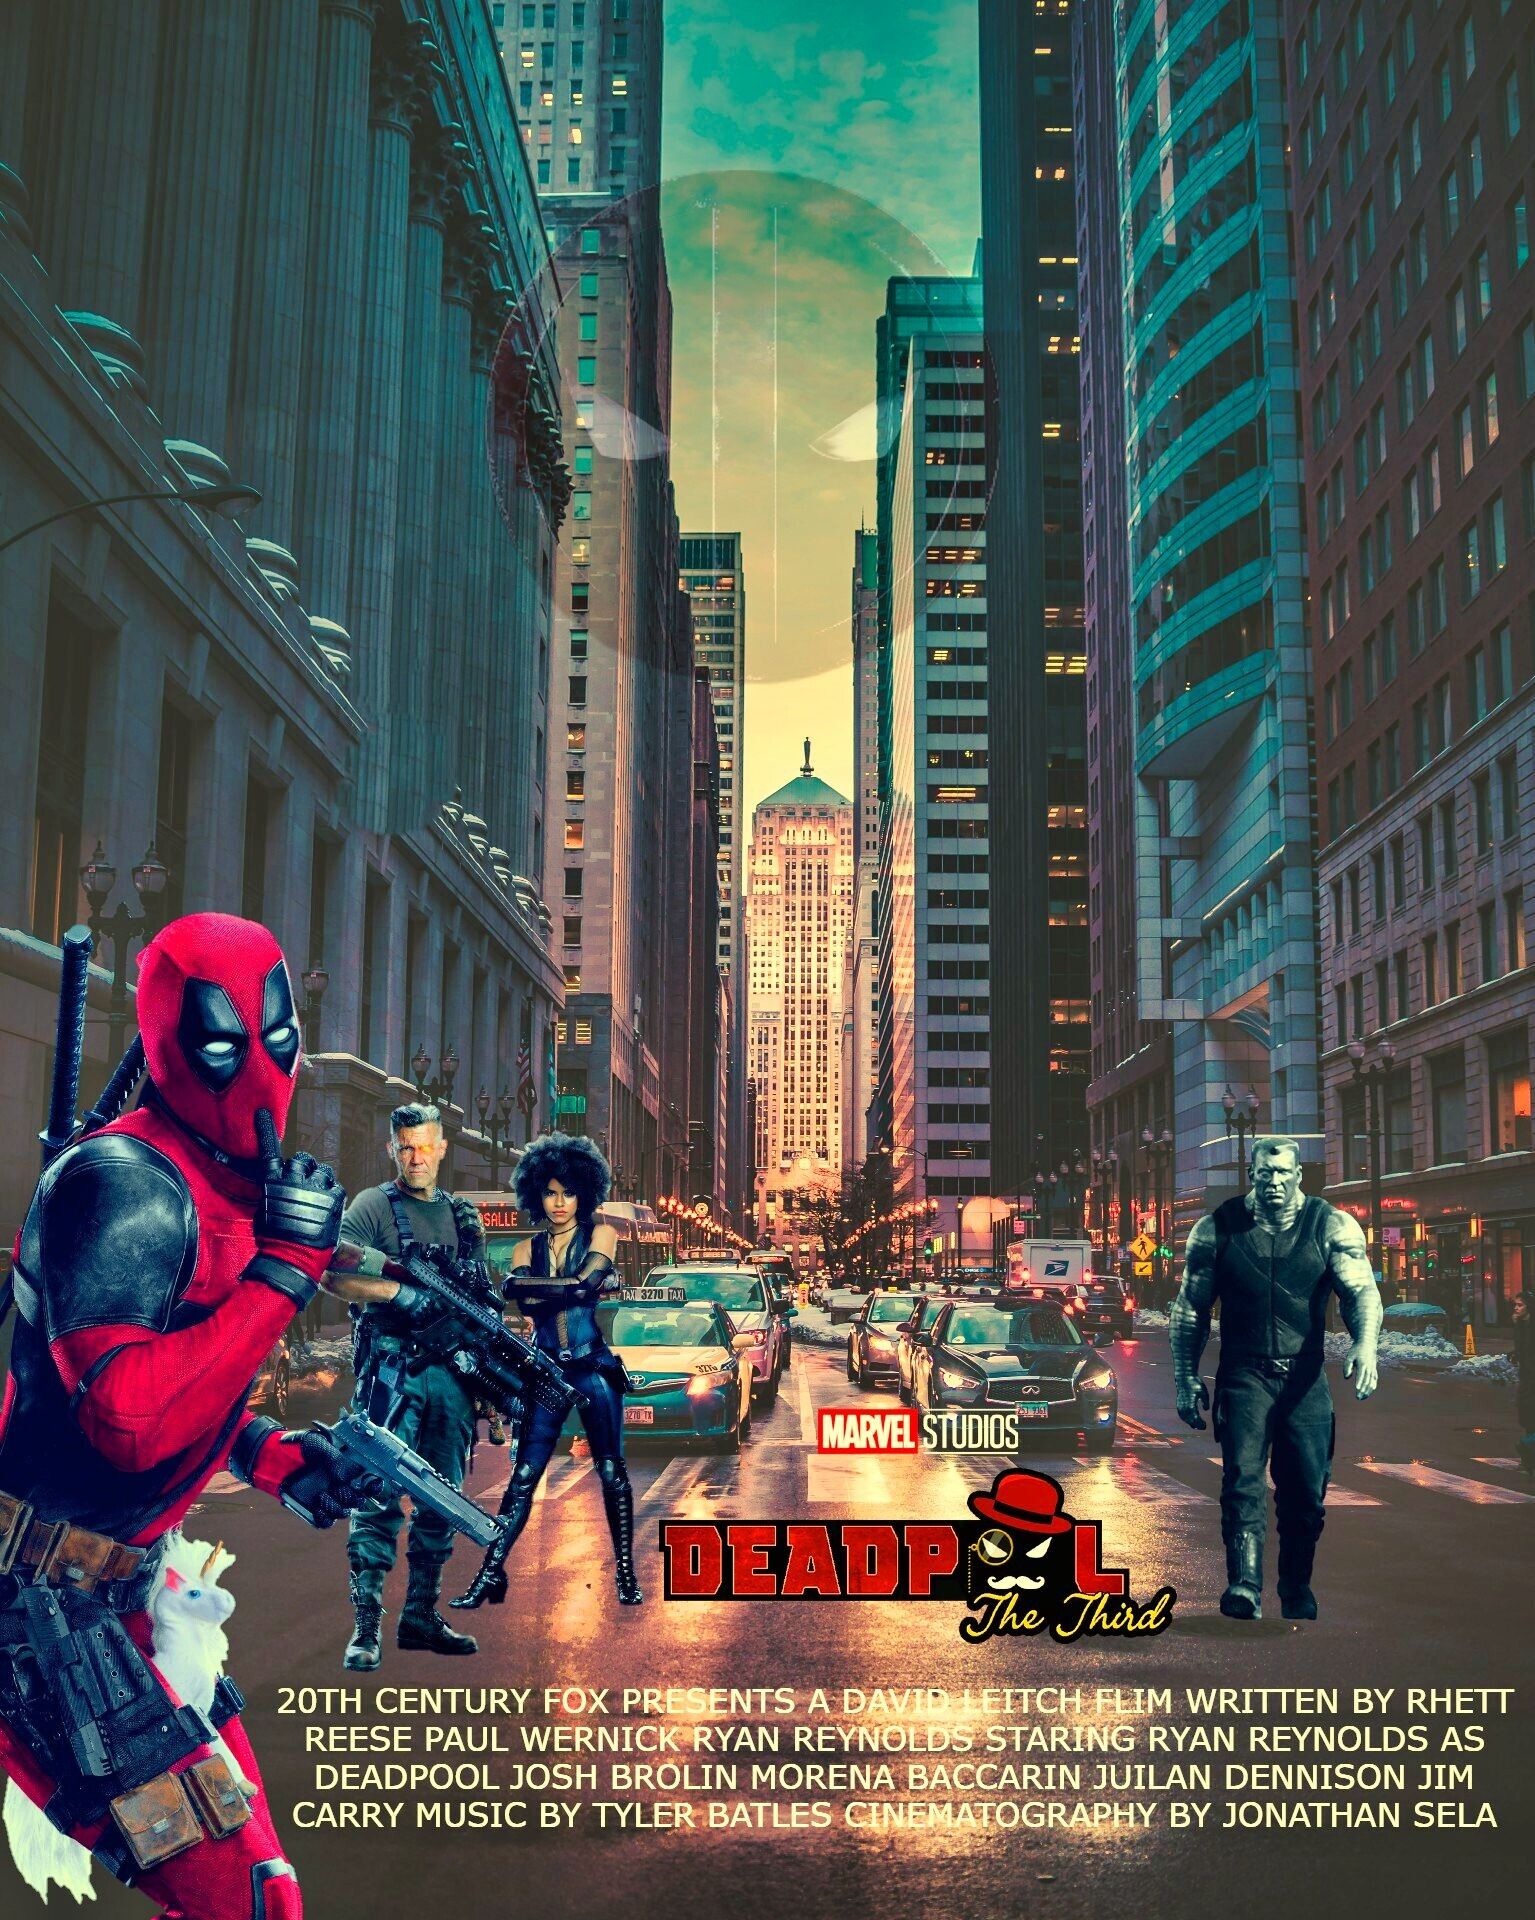 ArtStation - Deadpool 3 Poster